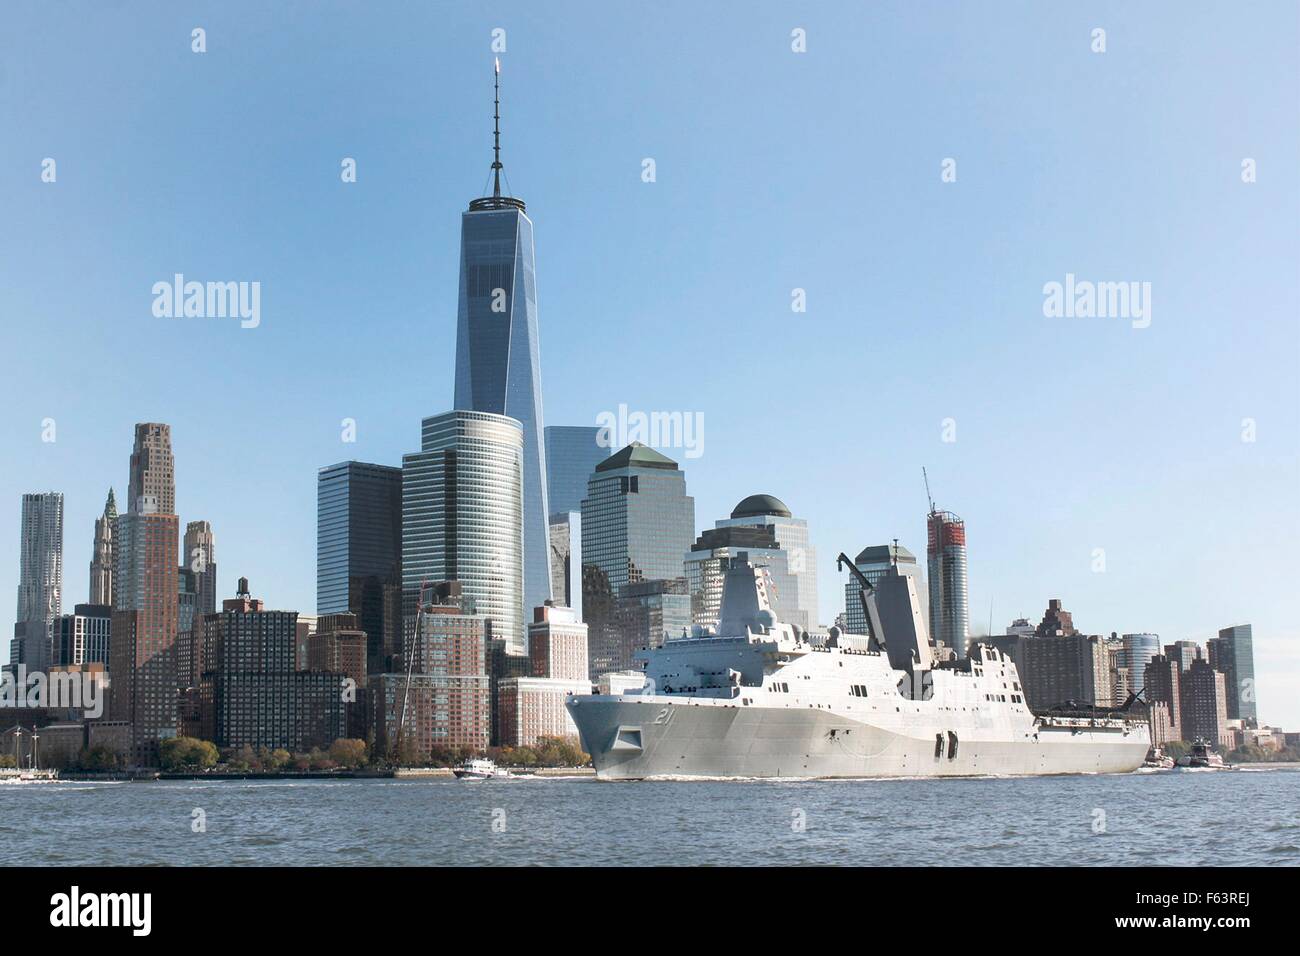 The U.S. Navy San Antonio-class amphibious transport dock USS New York steams up the Hudson River past the skyline of Manhattan during Veterans Week November 8, 2015 in New York City, NY. Stock Photo